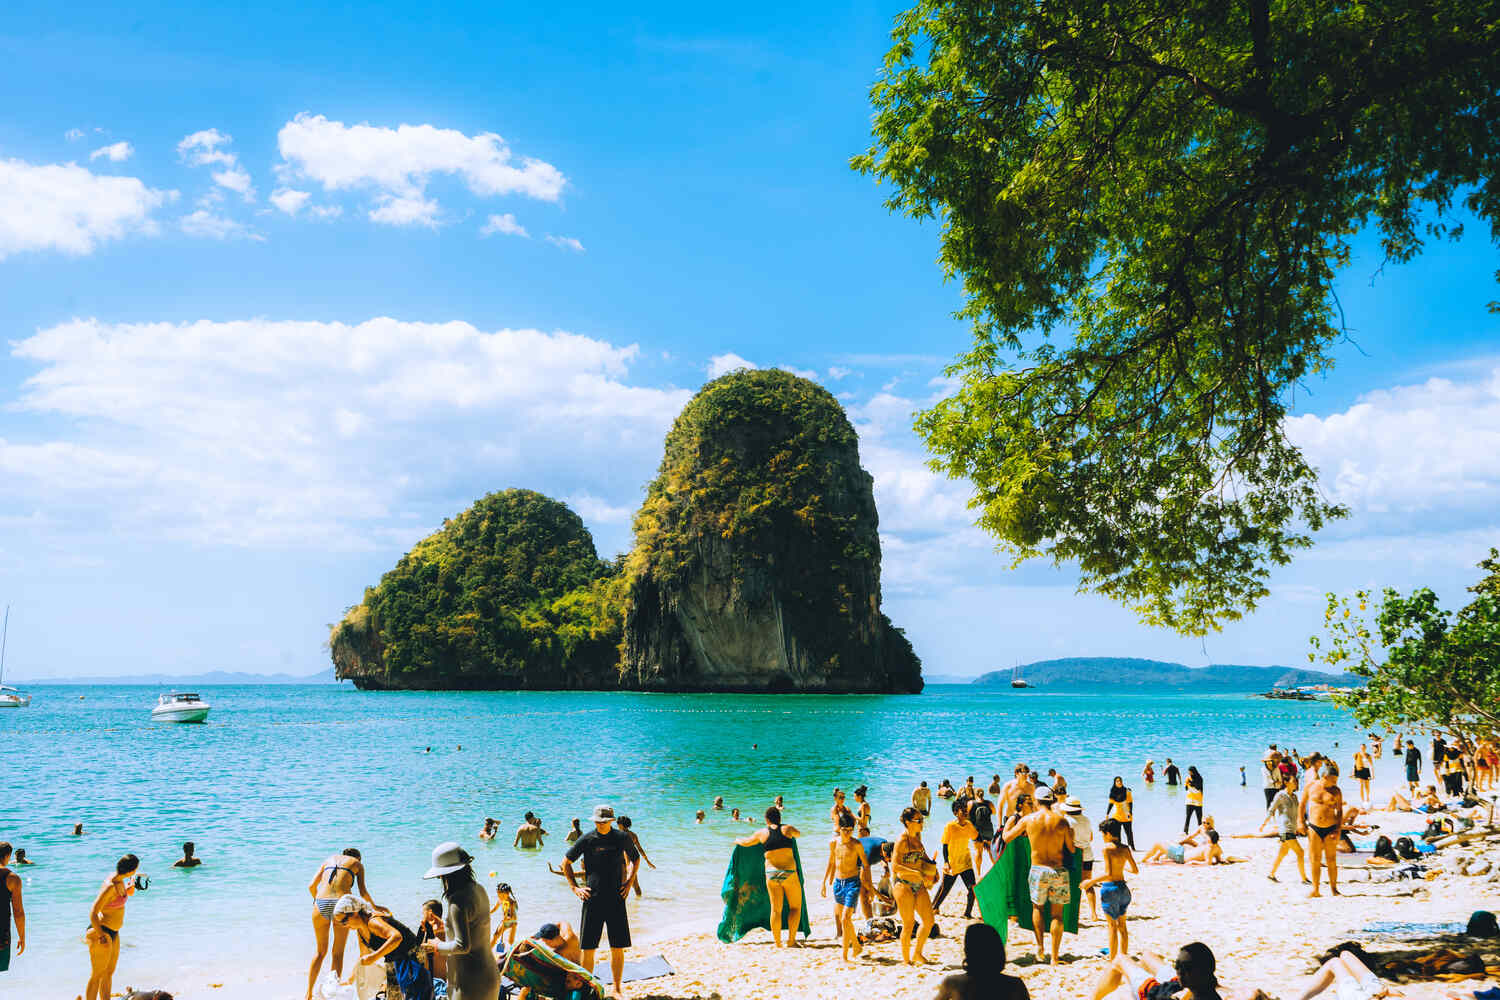 Tourist-crowds-in-Railay-Beach-Krabi-Thailand in February